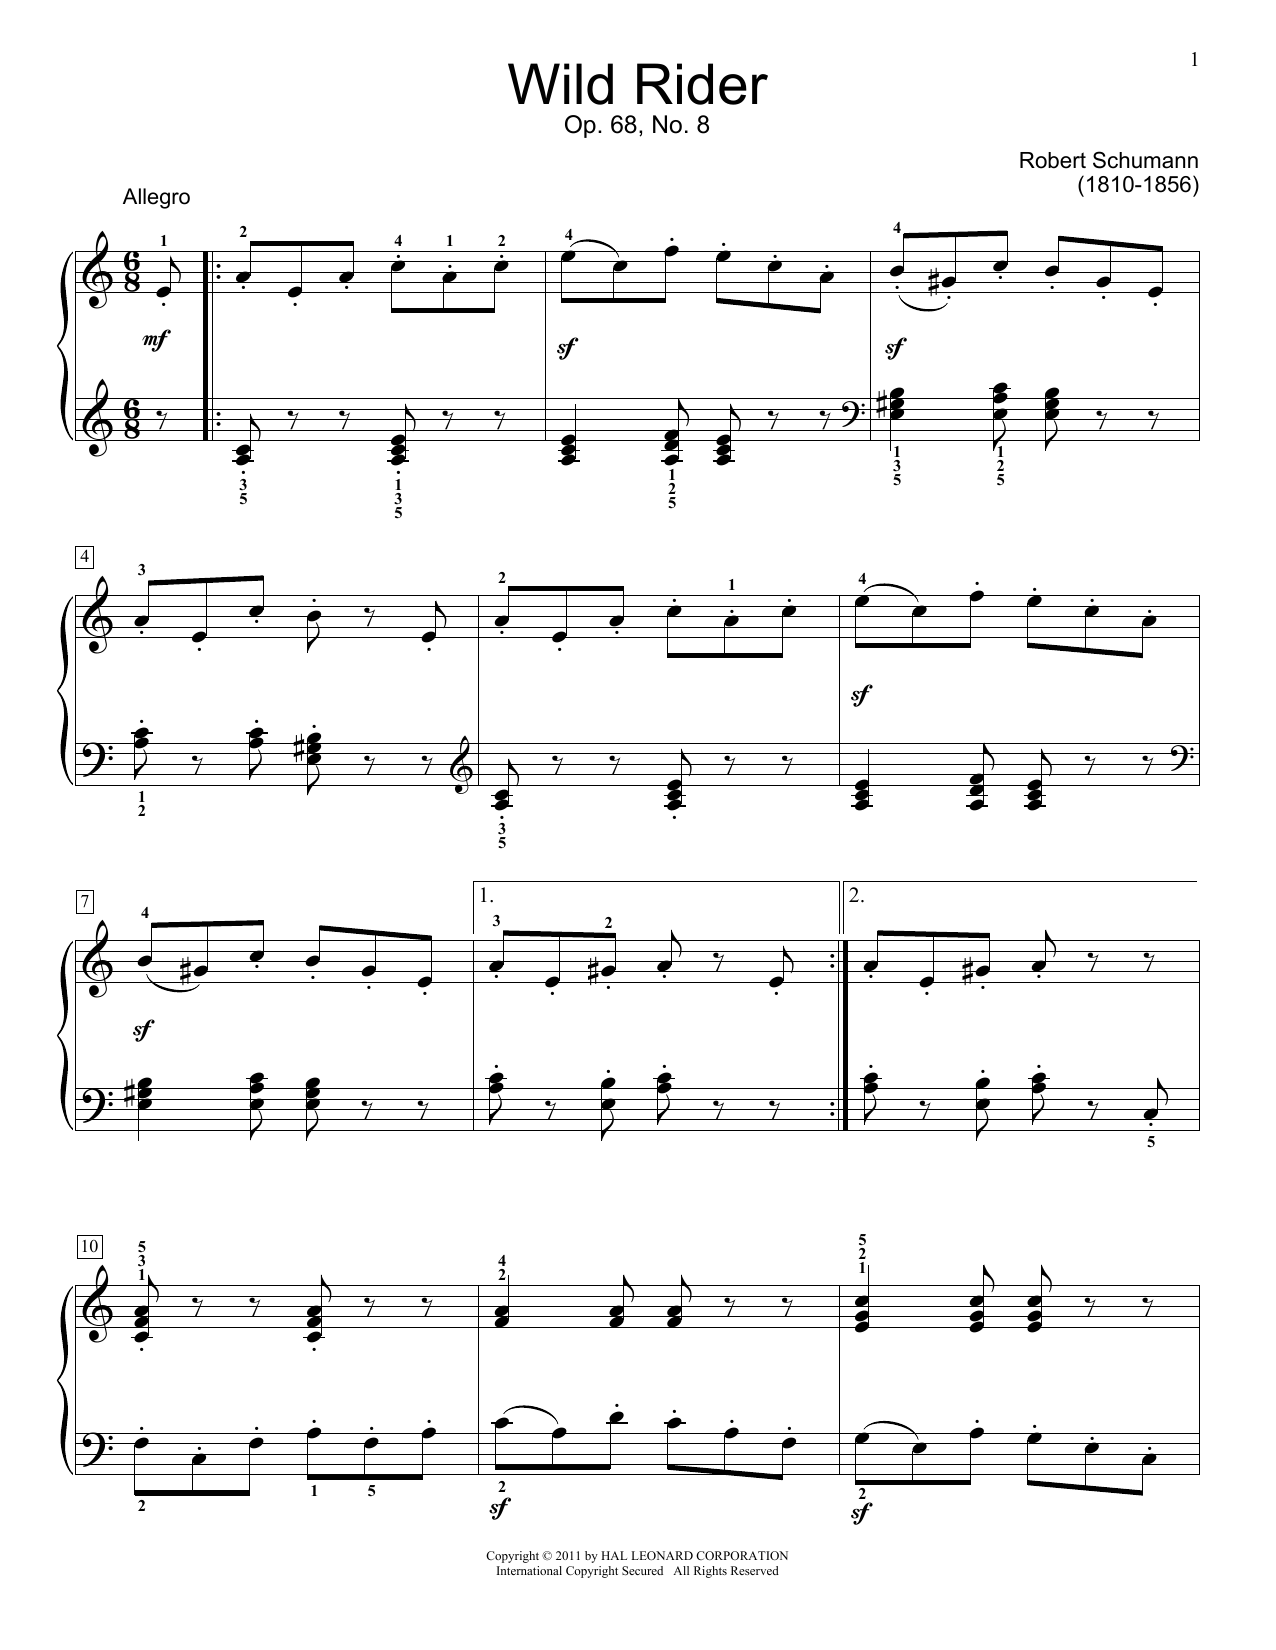 Robert Schumann The Wild Horseman, Op. 68, No. 8 Sheet Music Notes & Chords for Banjo - Download or Print PDF